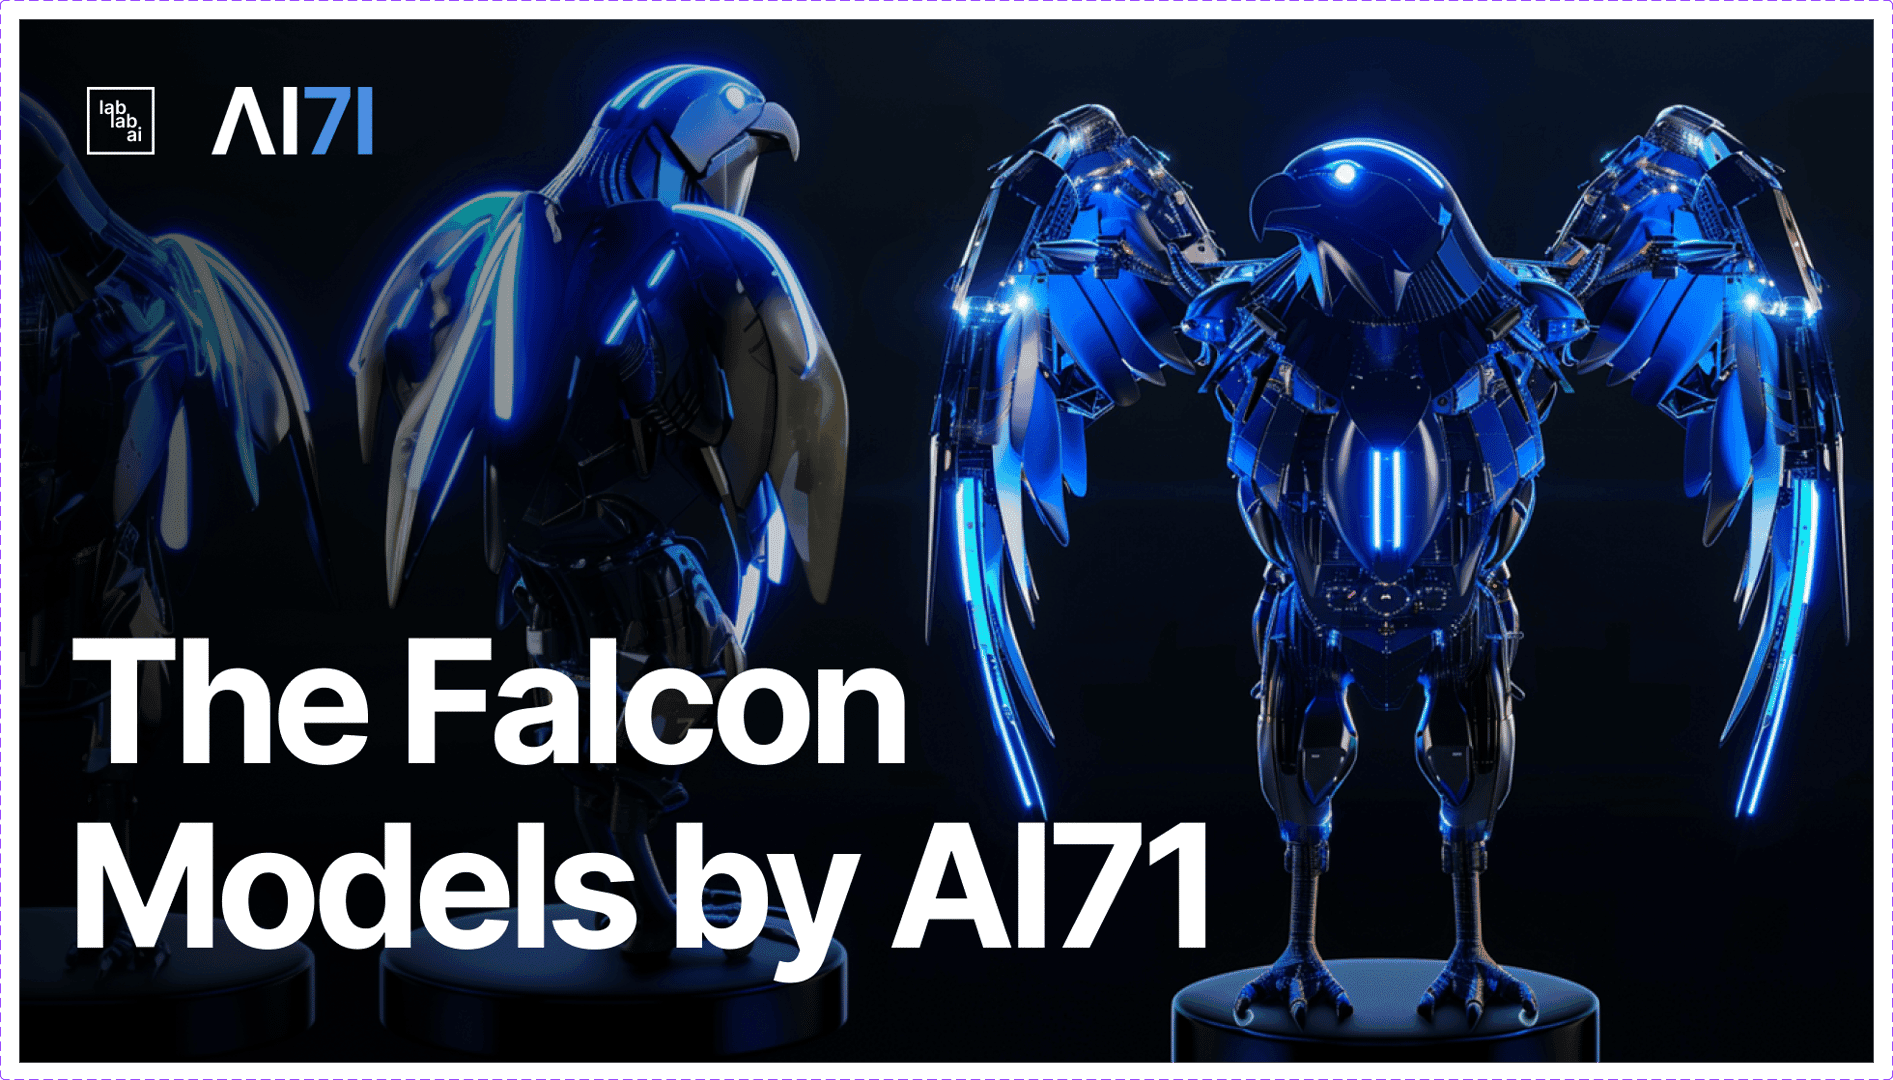 The Falcon Models: Pioneering the Future of AI